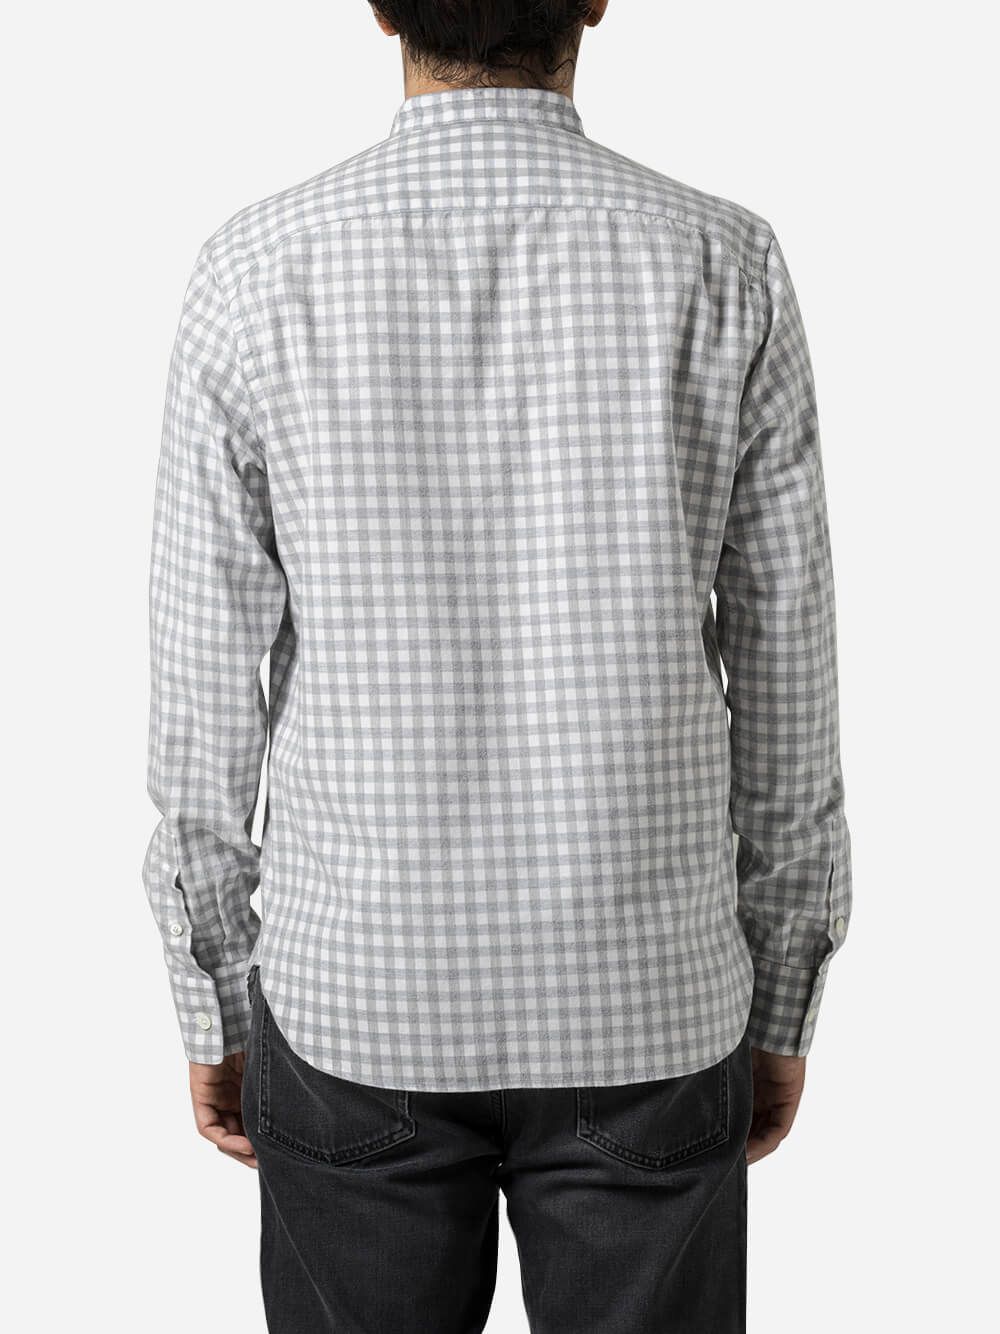 Weekend Grey Flannel Shirt | The Board